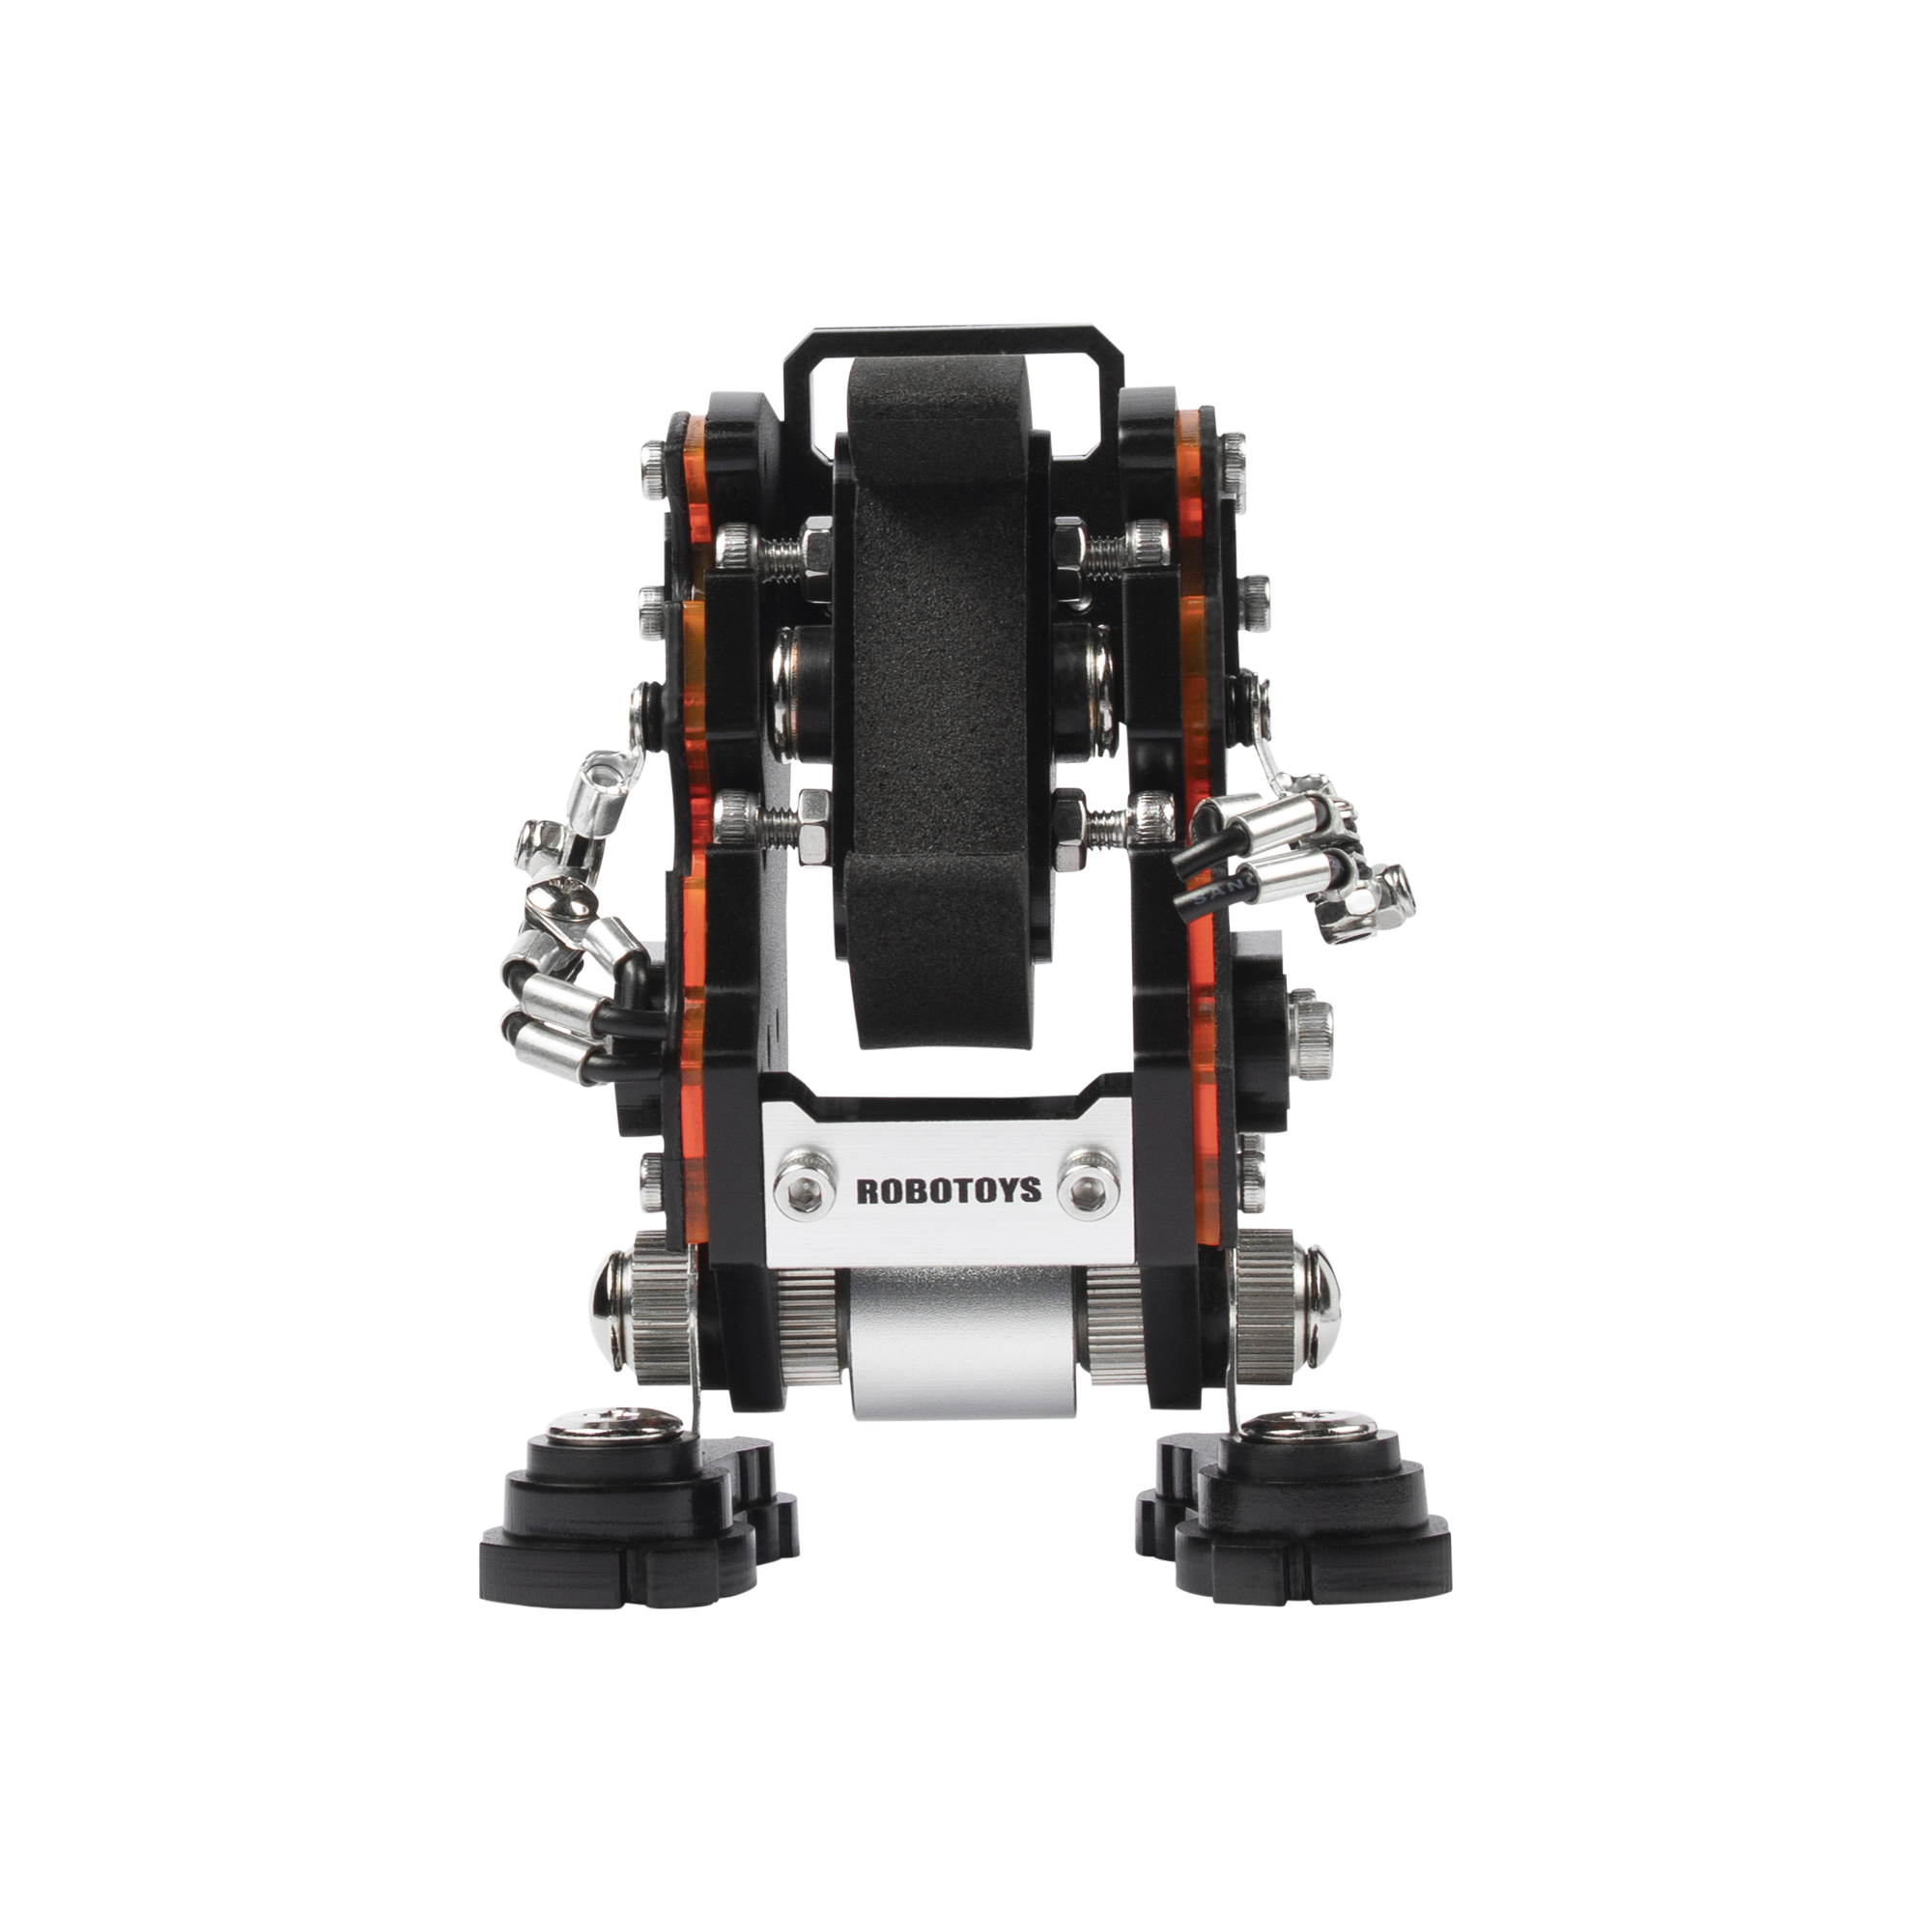 [RoboToys] Watch Stand - NanoBot - Saffiano Black